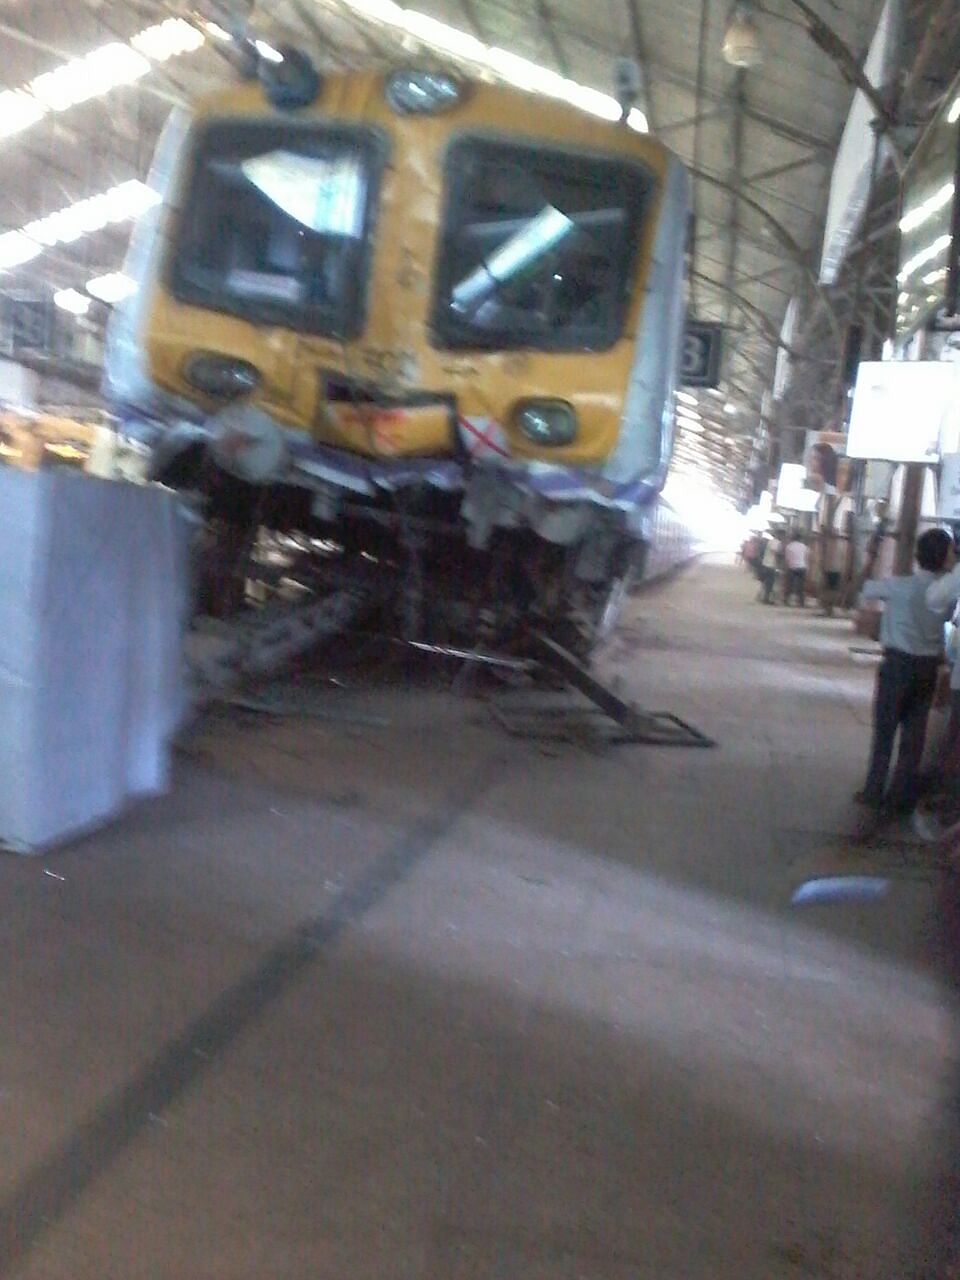 A train overshot the platform and crashed at the Churchgate Station in Mumbai. 